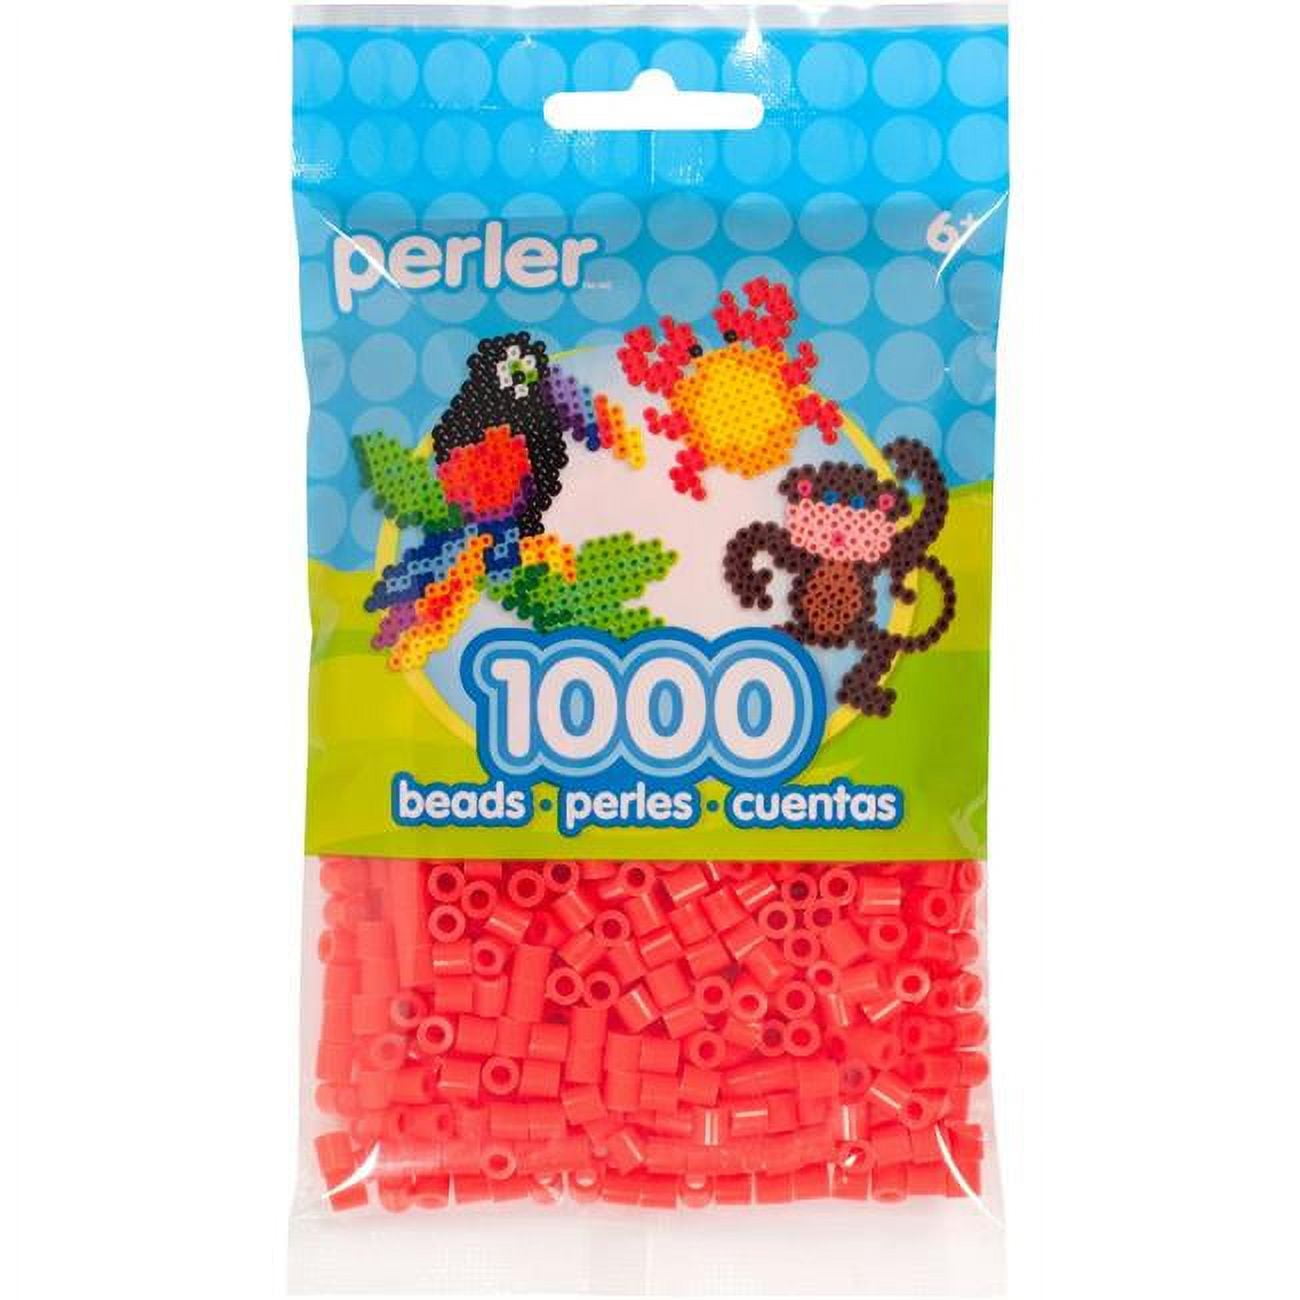 Perler® Beads 12 Days of Crafting Beading Kit